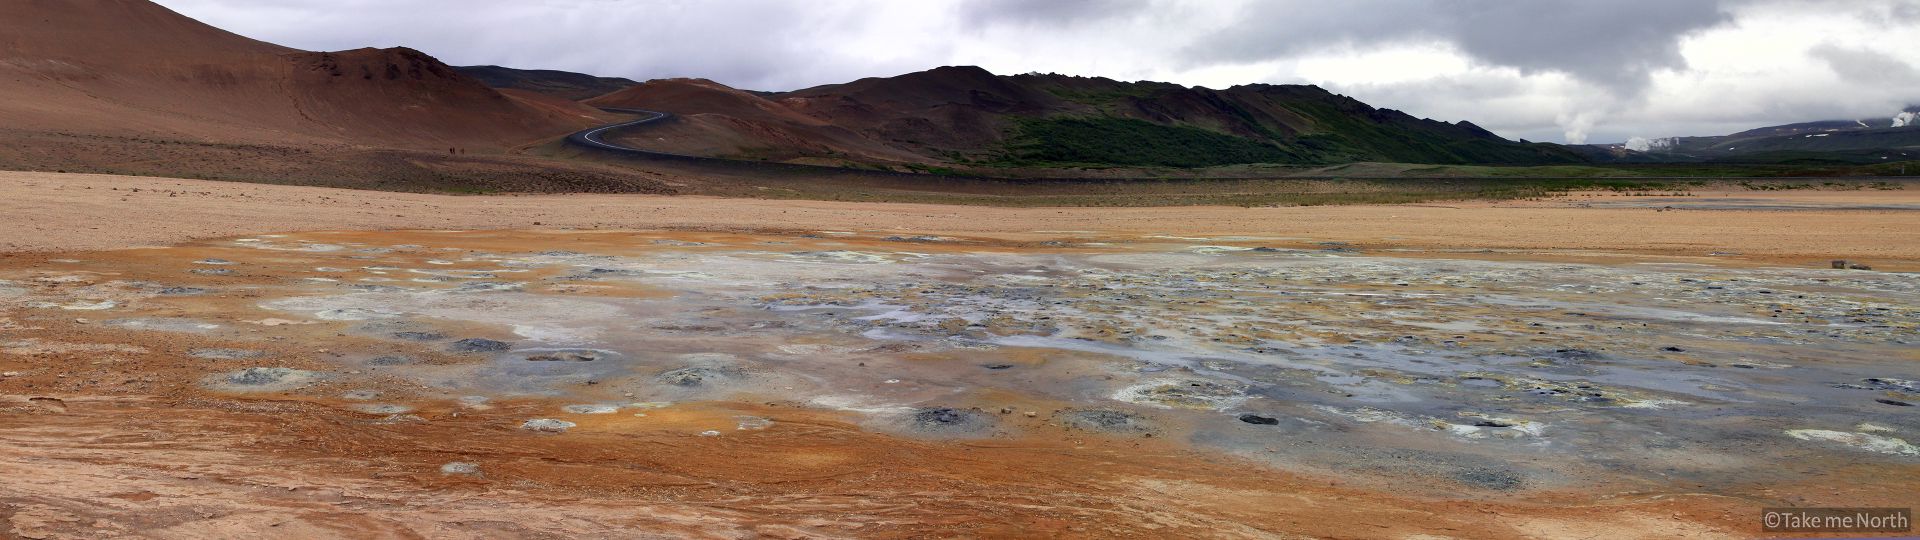 Mývatn: volcanic hotspot